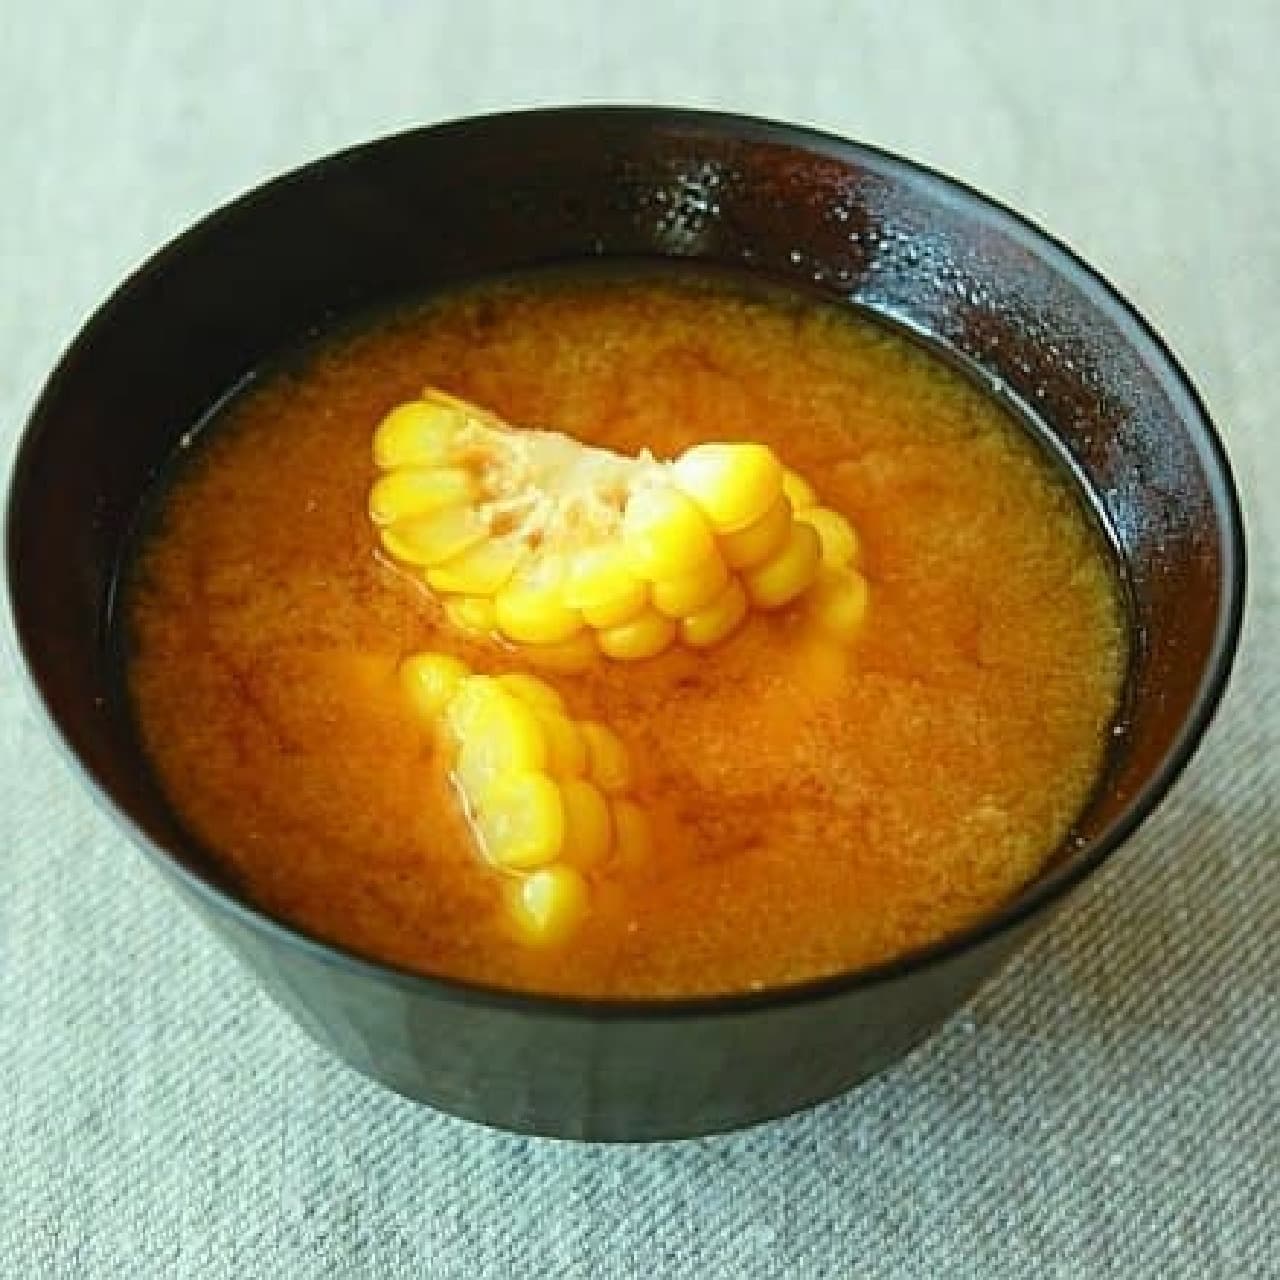 Yamagata Prefecture "Miso soup of corn"